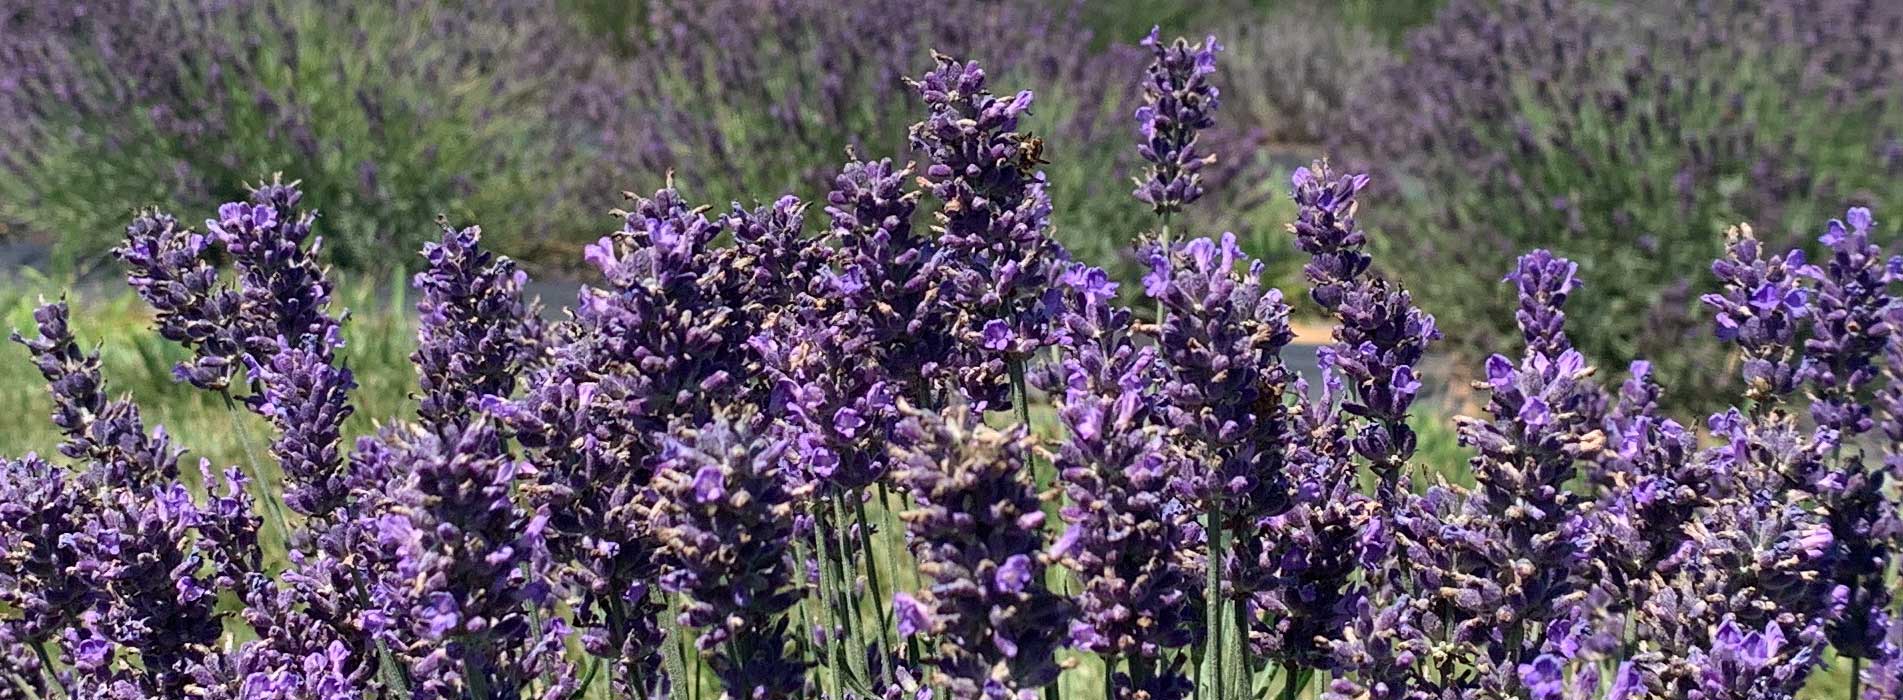 Lavender Festival at Maple Lawn Farms